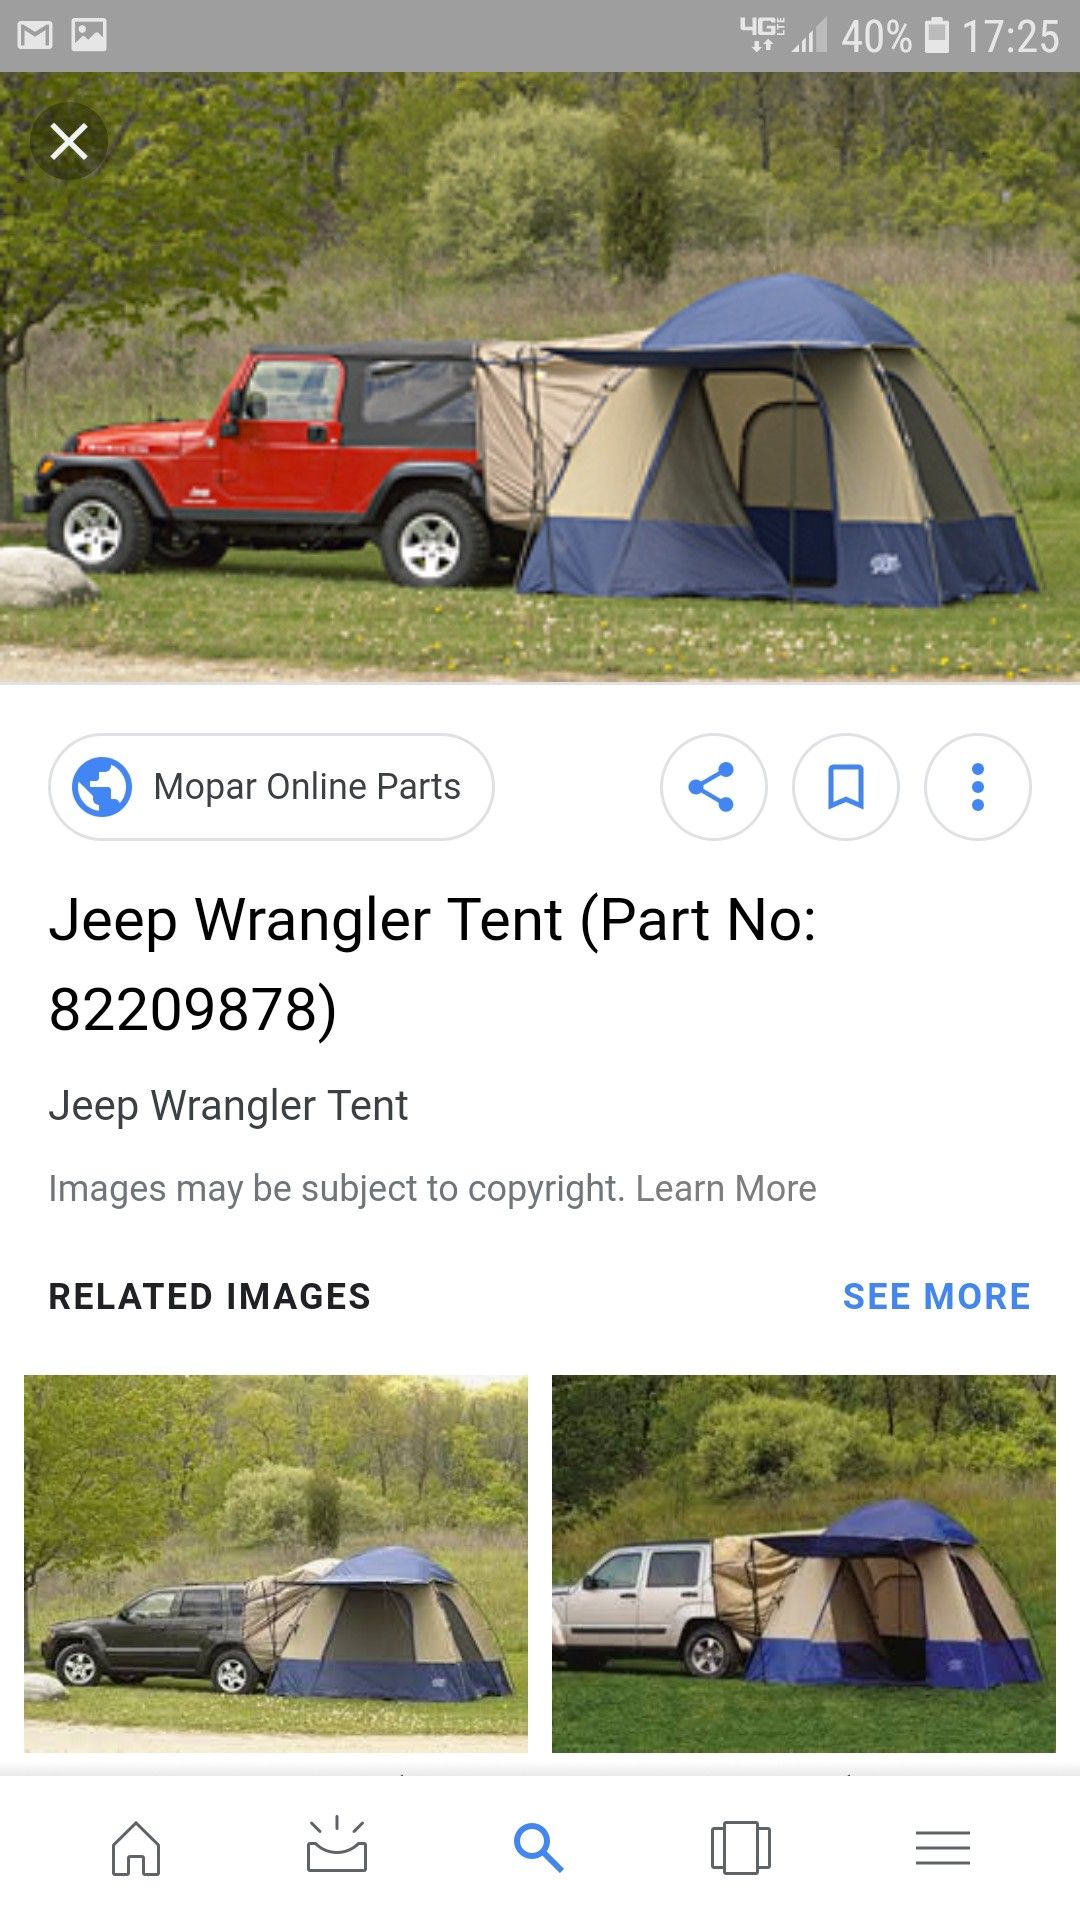 2010 Mopar Jeep Wrangler tent